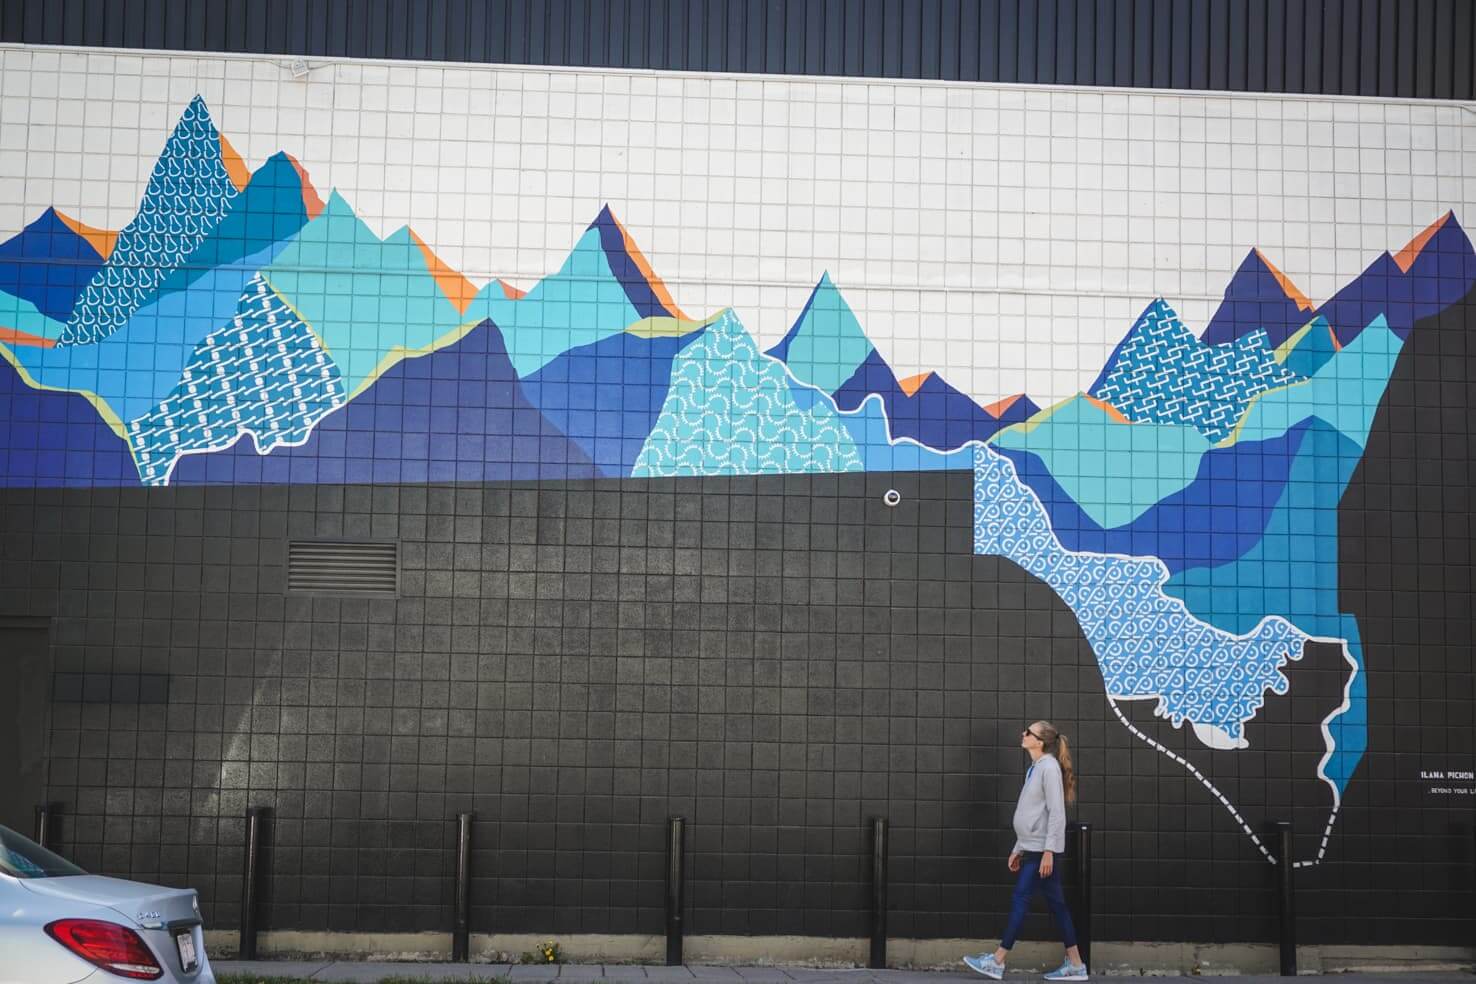 Murals in Calgary